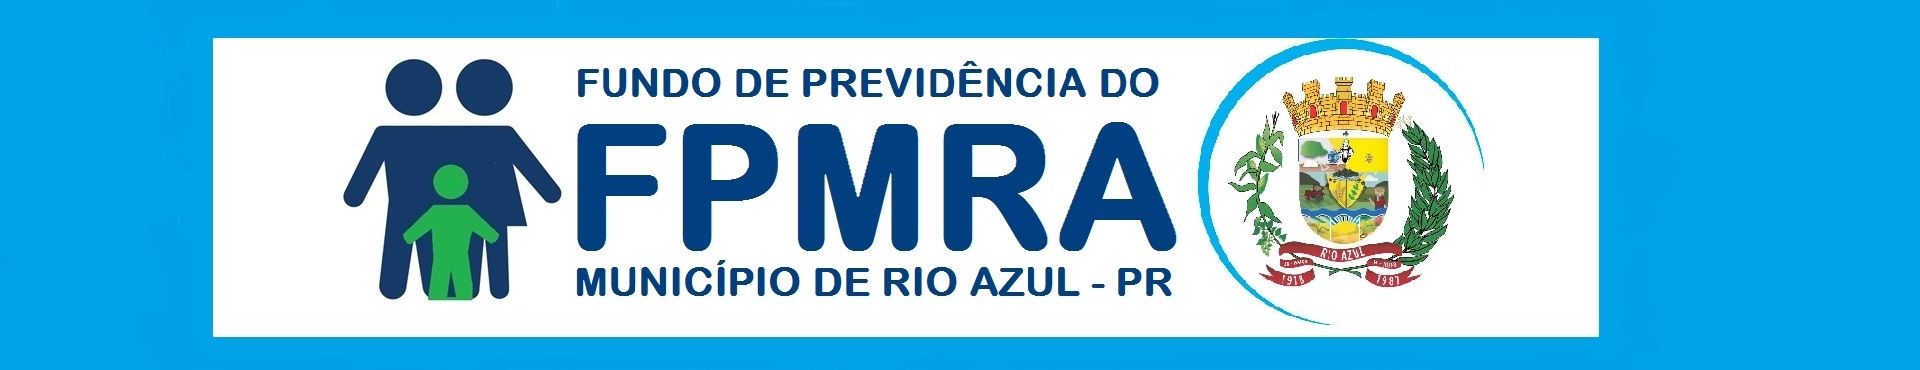 Fundo de Previdência do Município de Rio Azul